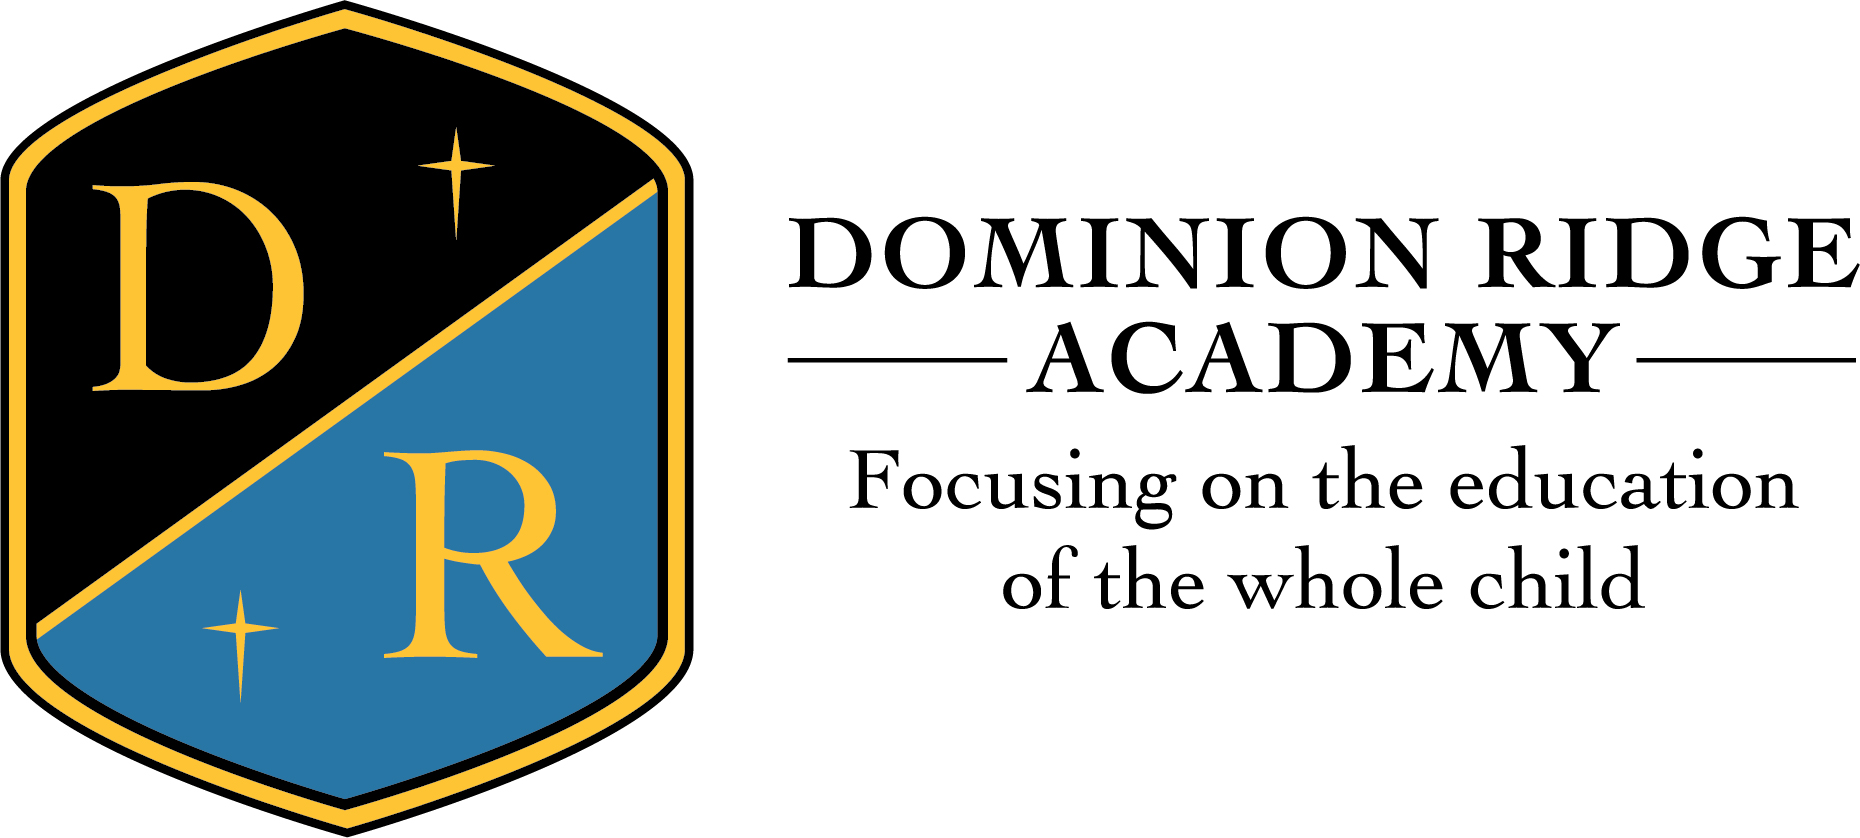 Dominion Ridge Academy